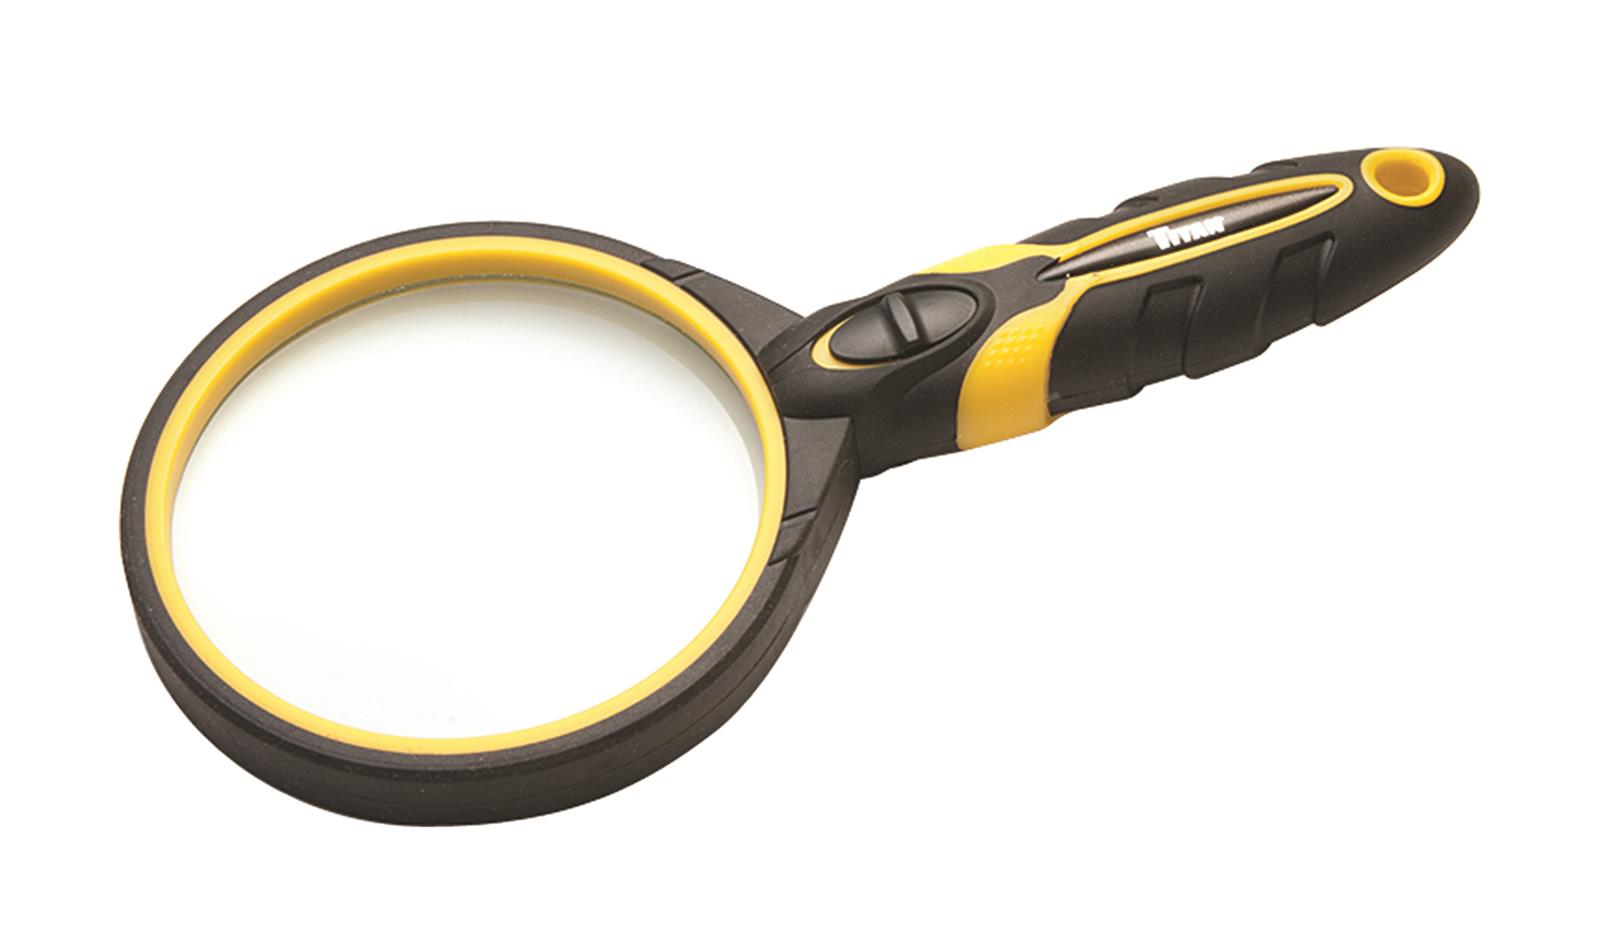 Titan Tools 15028 Titan 4.4X Magnifying Glasses